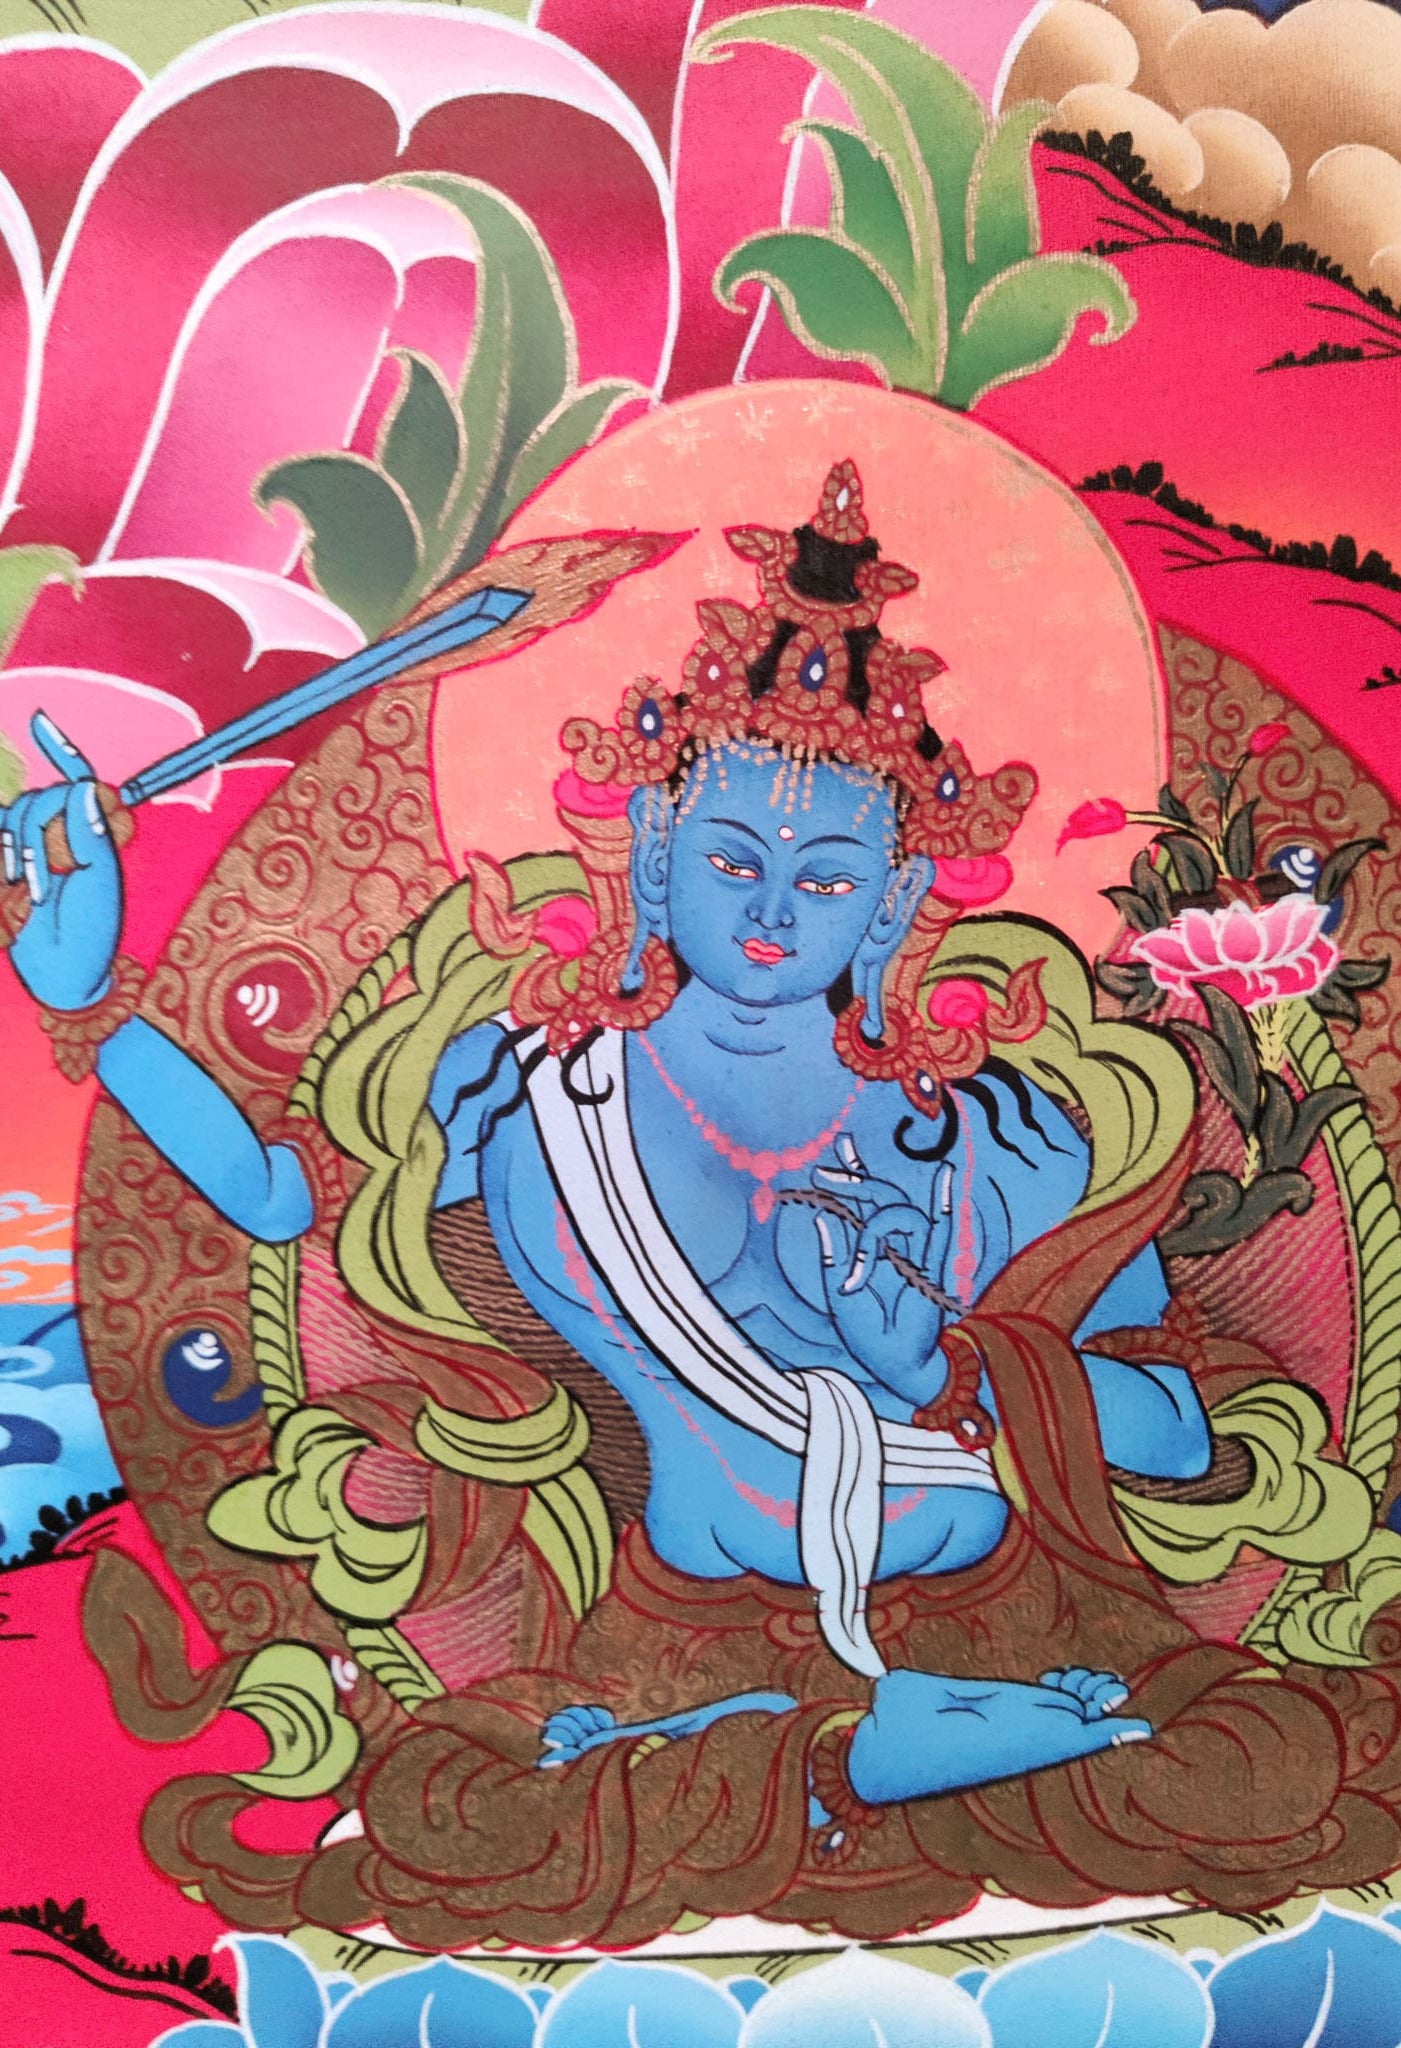 5 Manjushri Thangka Paintings - Lucky Thanka